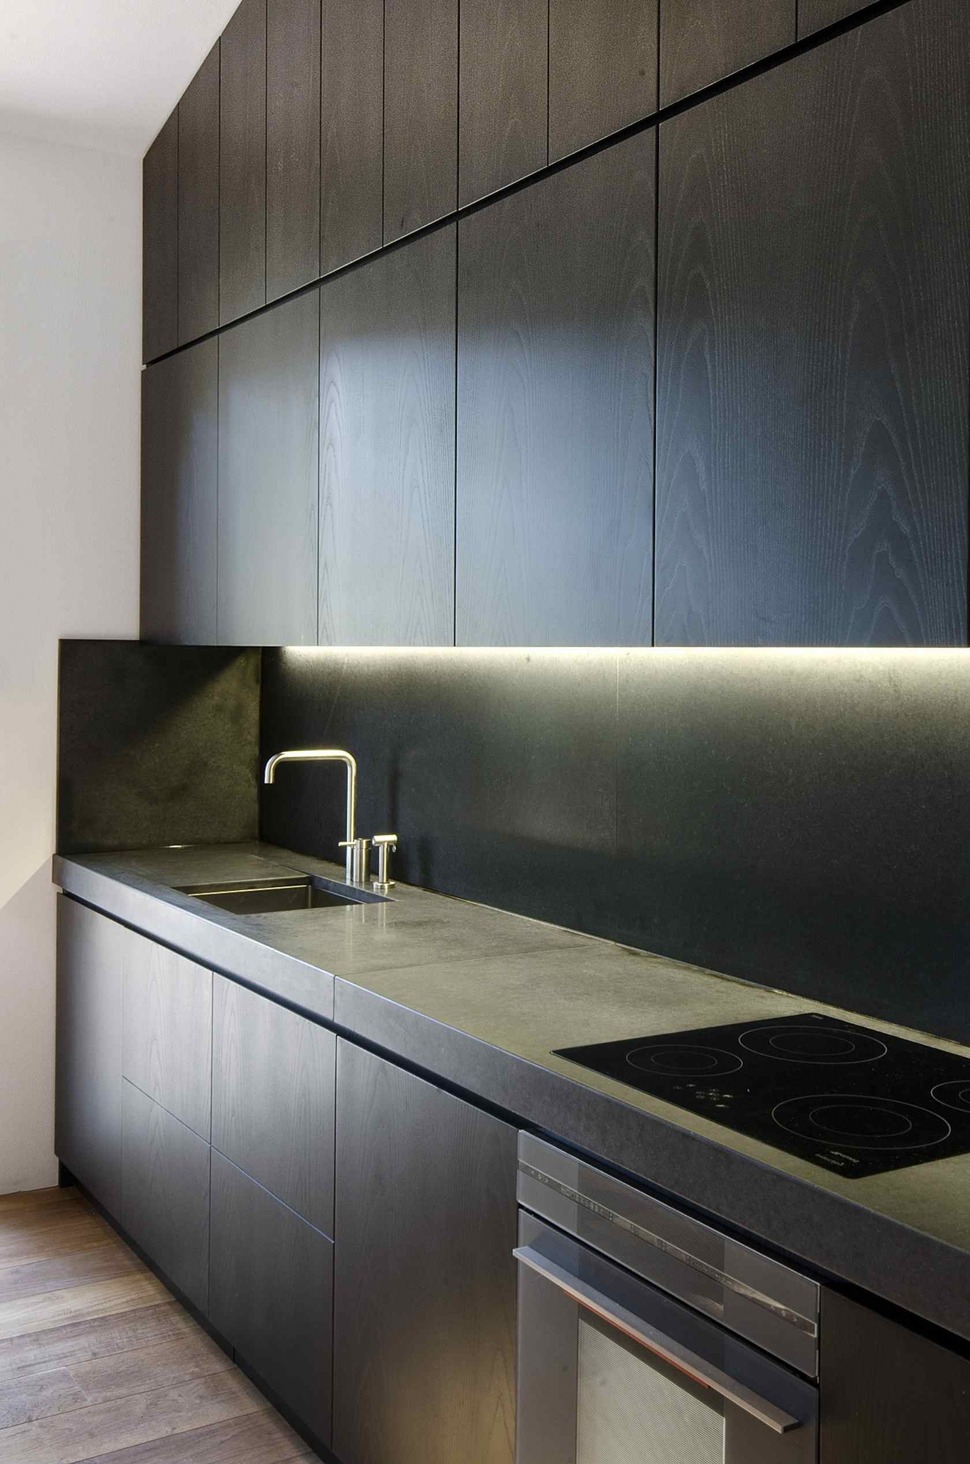 minimal-italian-home-blends-unique-stone-wood-finishes-14-kitchen-appliances.jpg